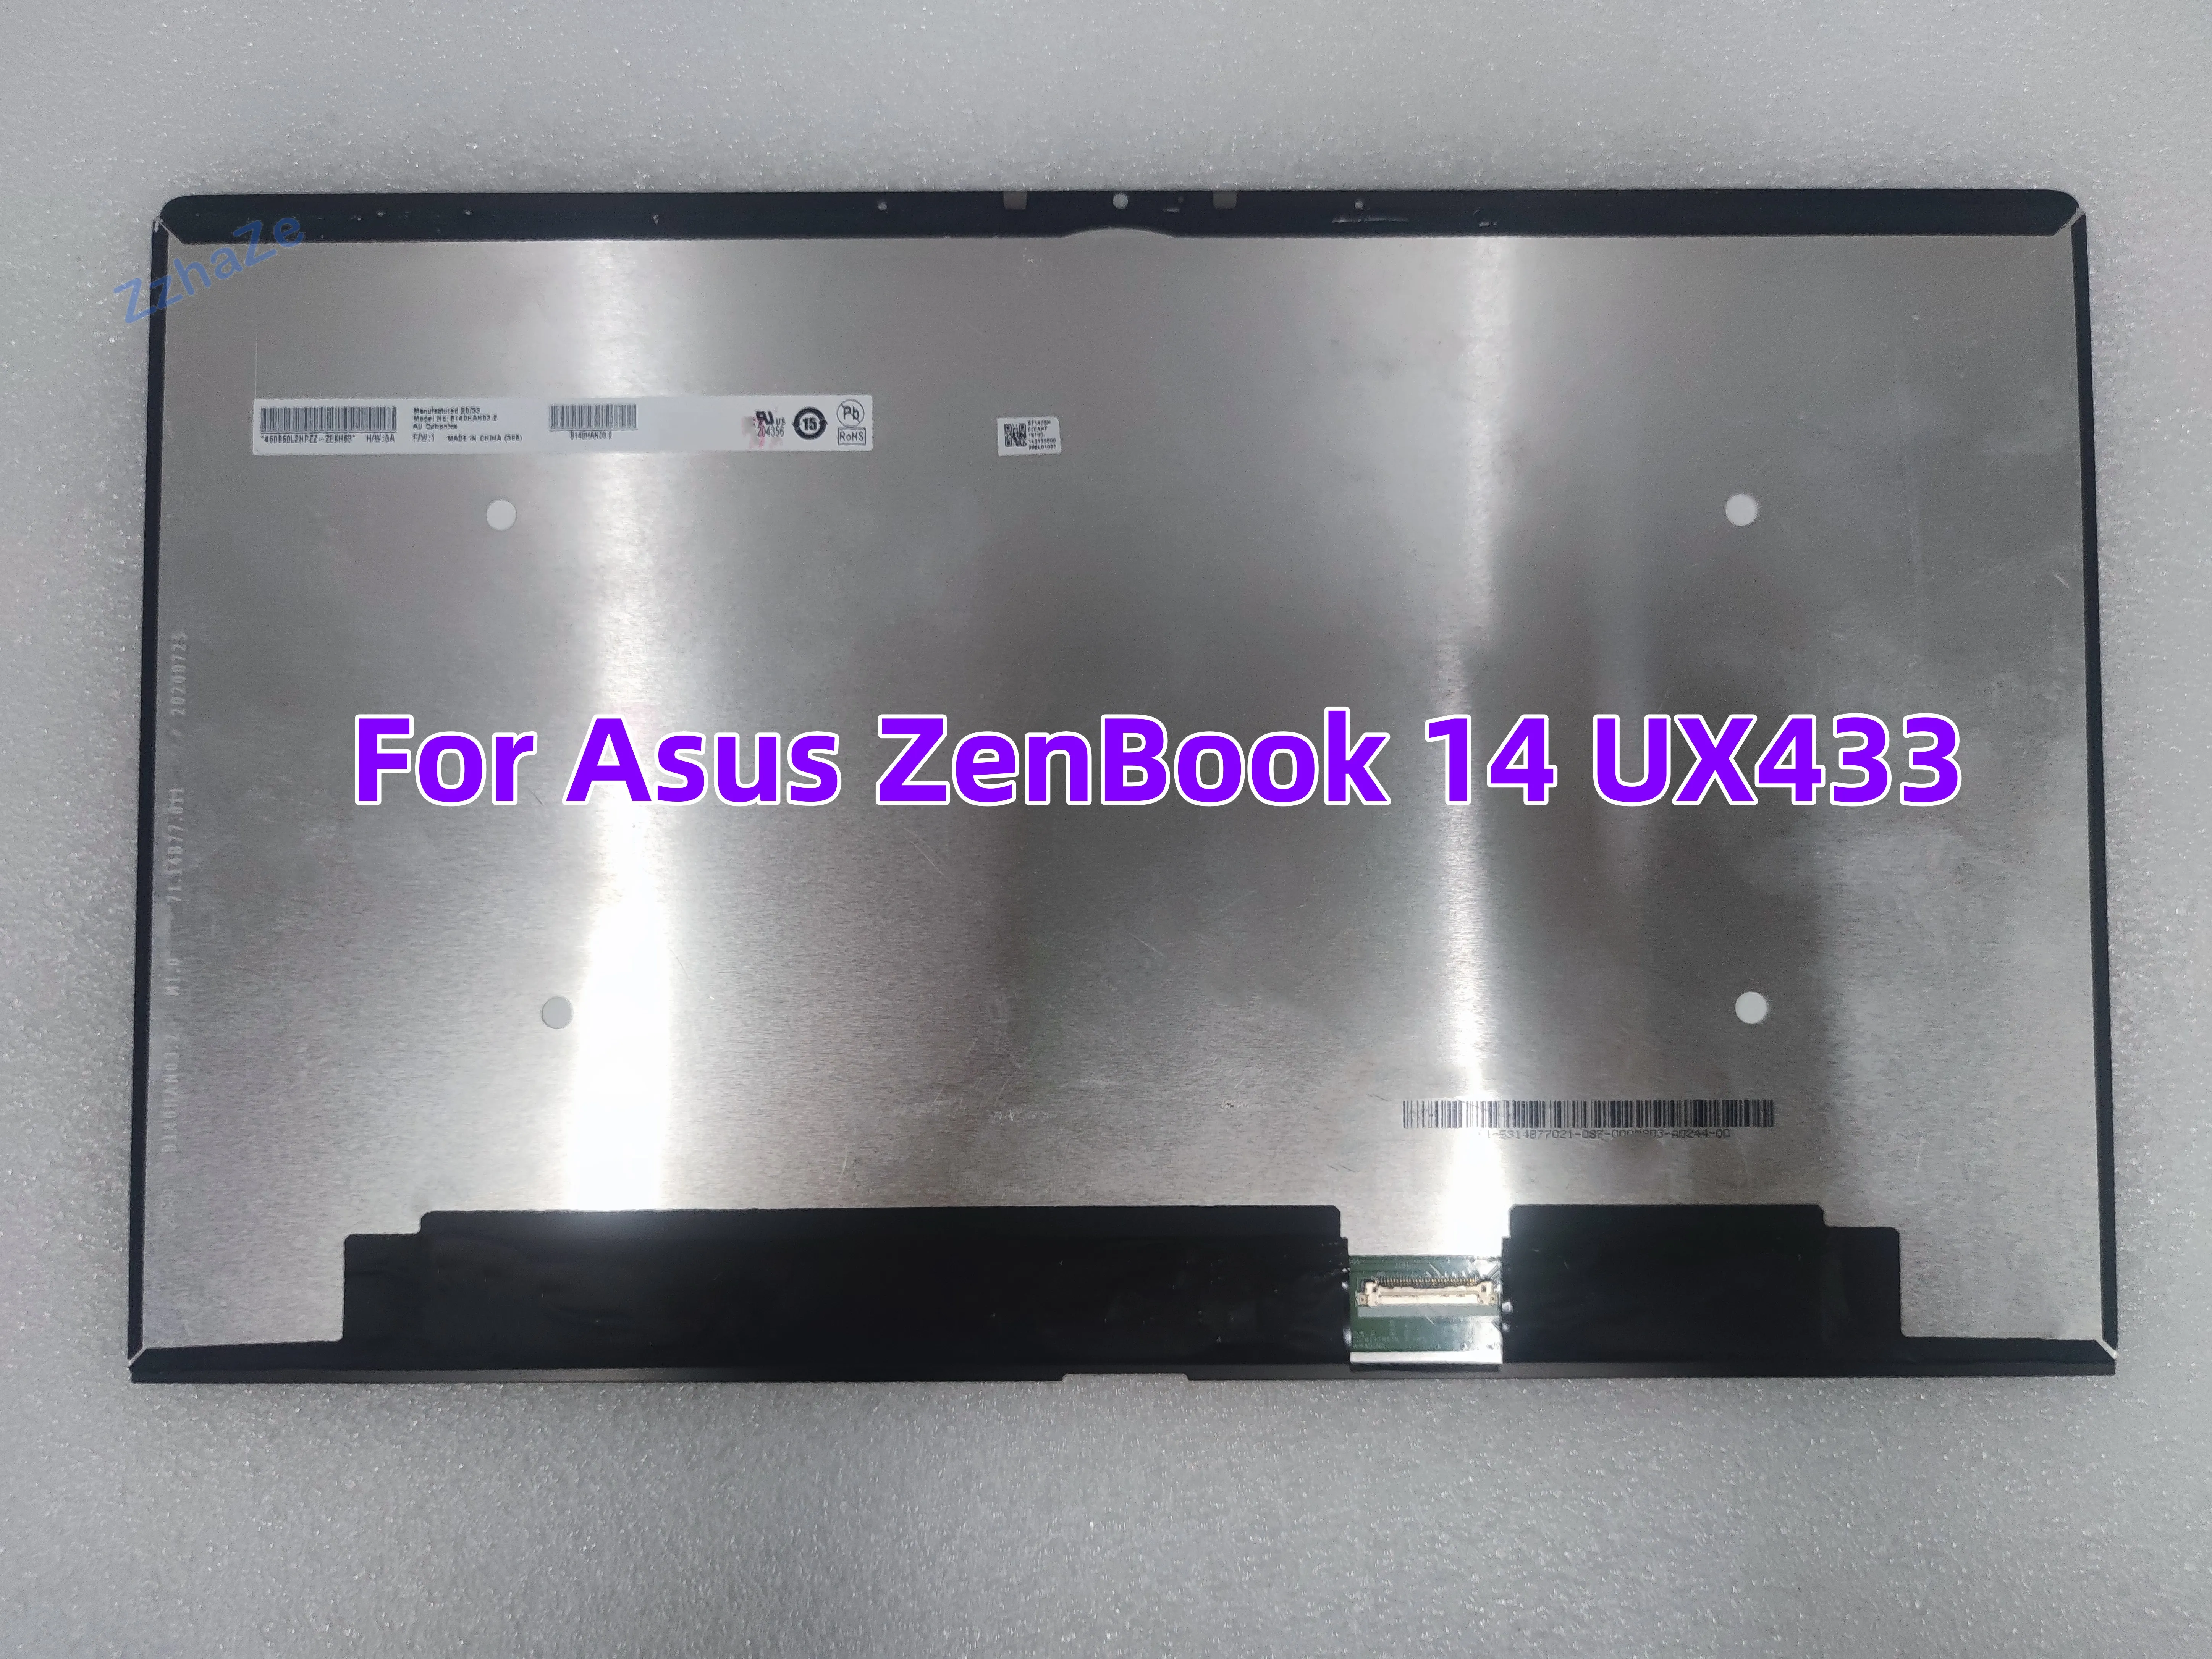 

For Asus ZenBook 14 UX4300 UX433 U4300 UX433F UX433FN Screen LCD Display Assembly panel matrix FHD 1920x1080 14"